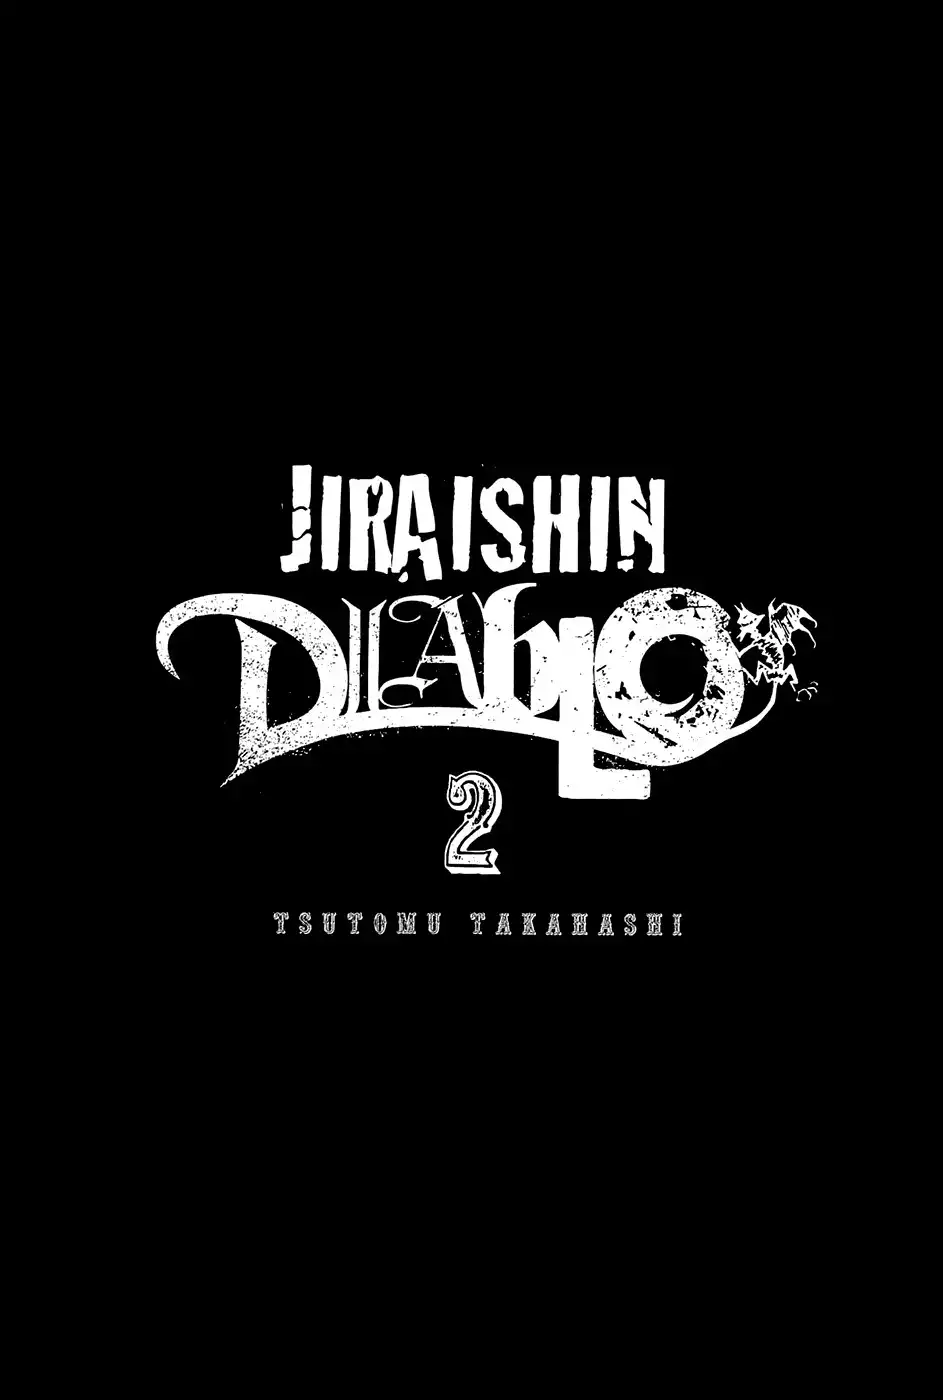 Jiraishin Diablo Chapter 7